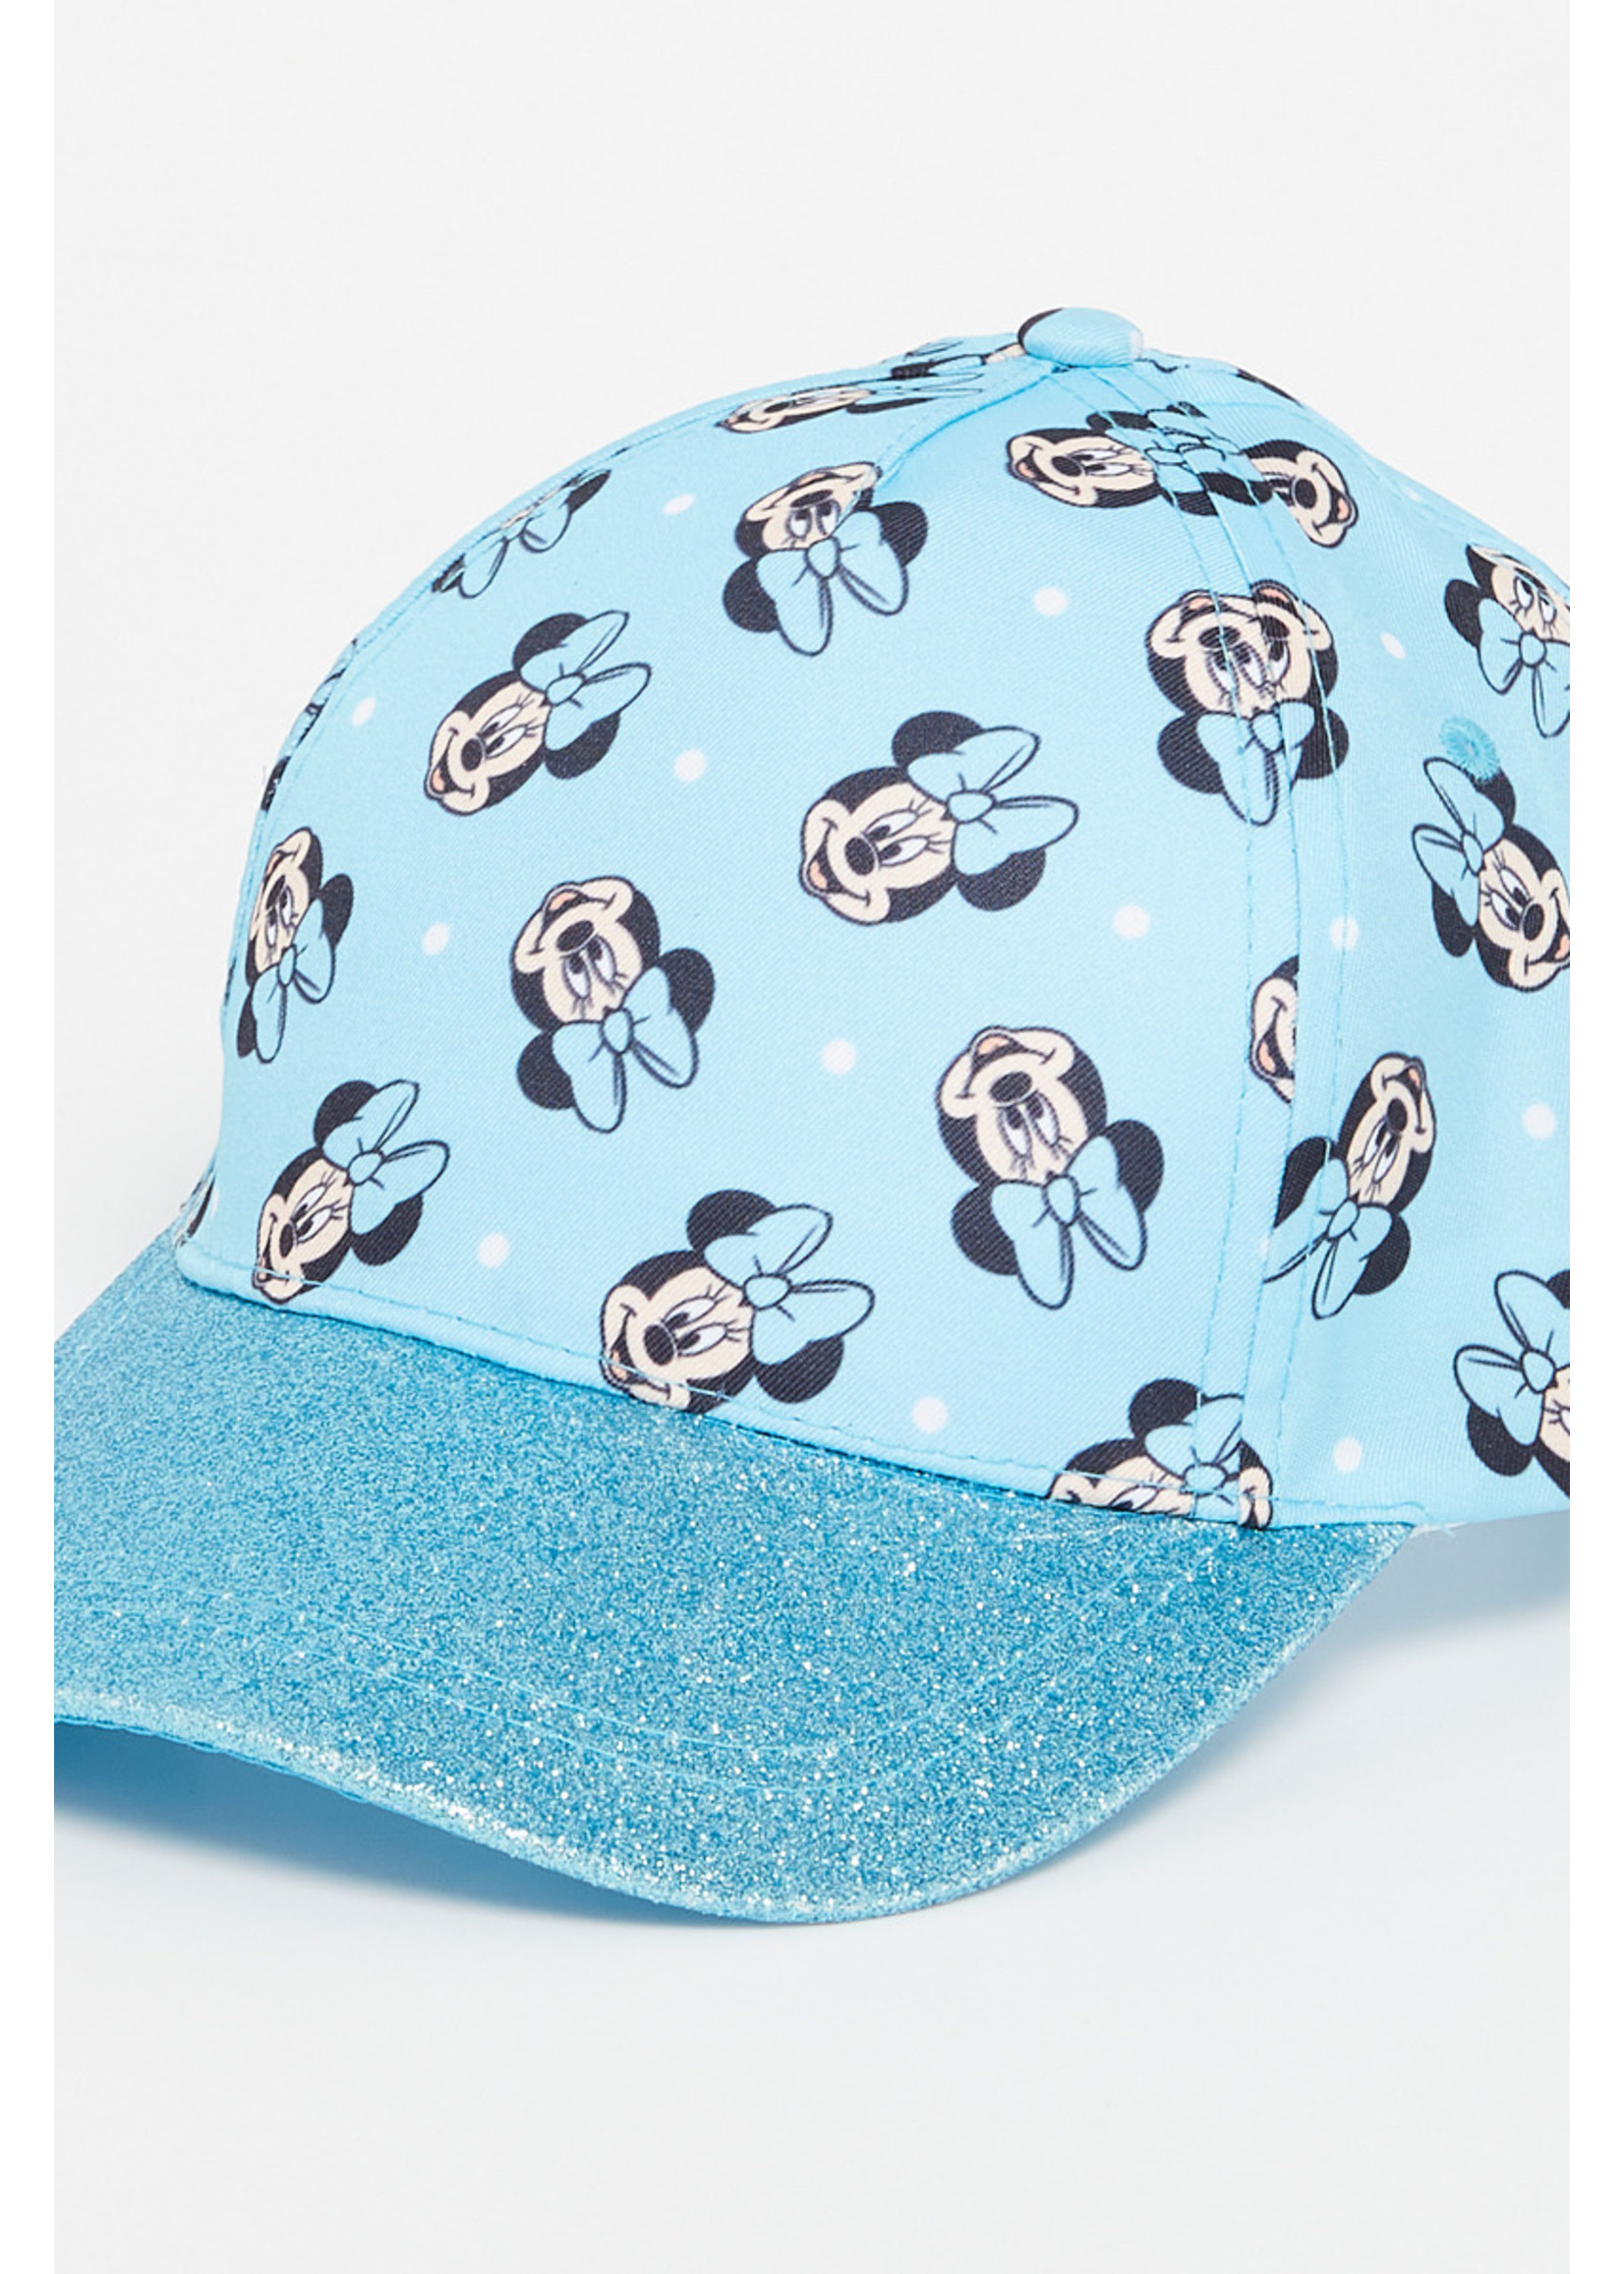 Disney Minnie Mouse baseball cap from Disney blue